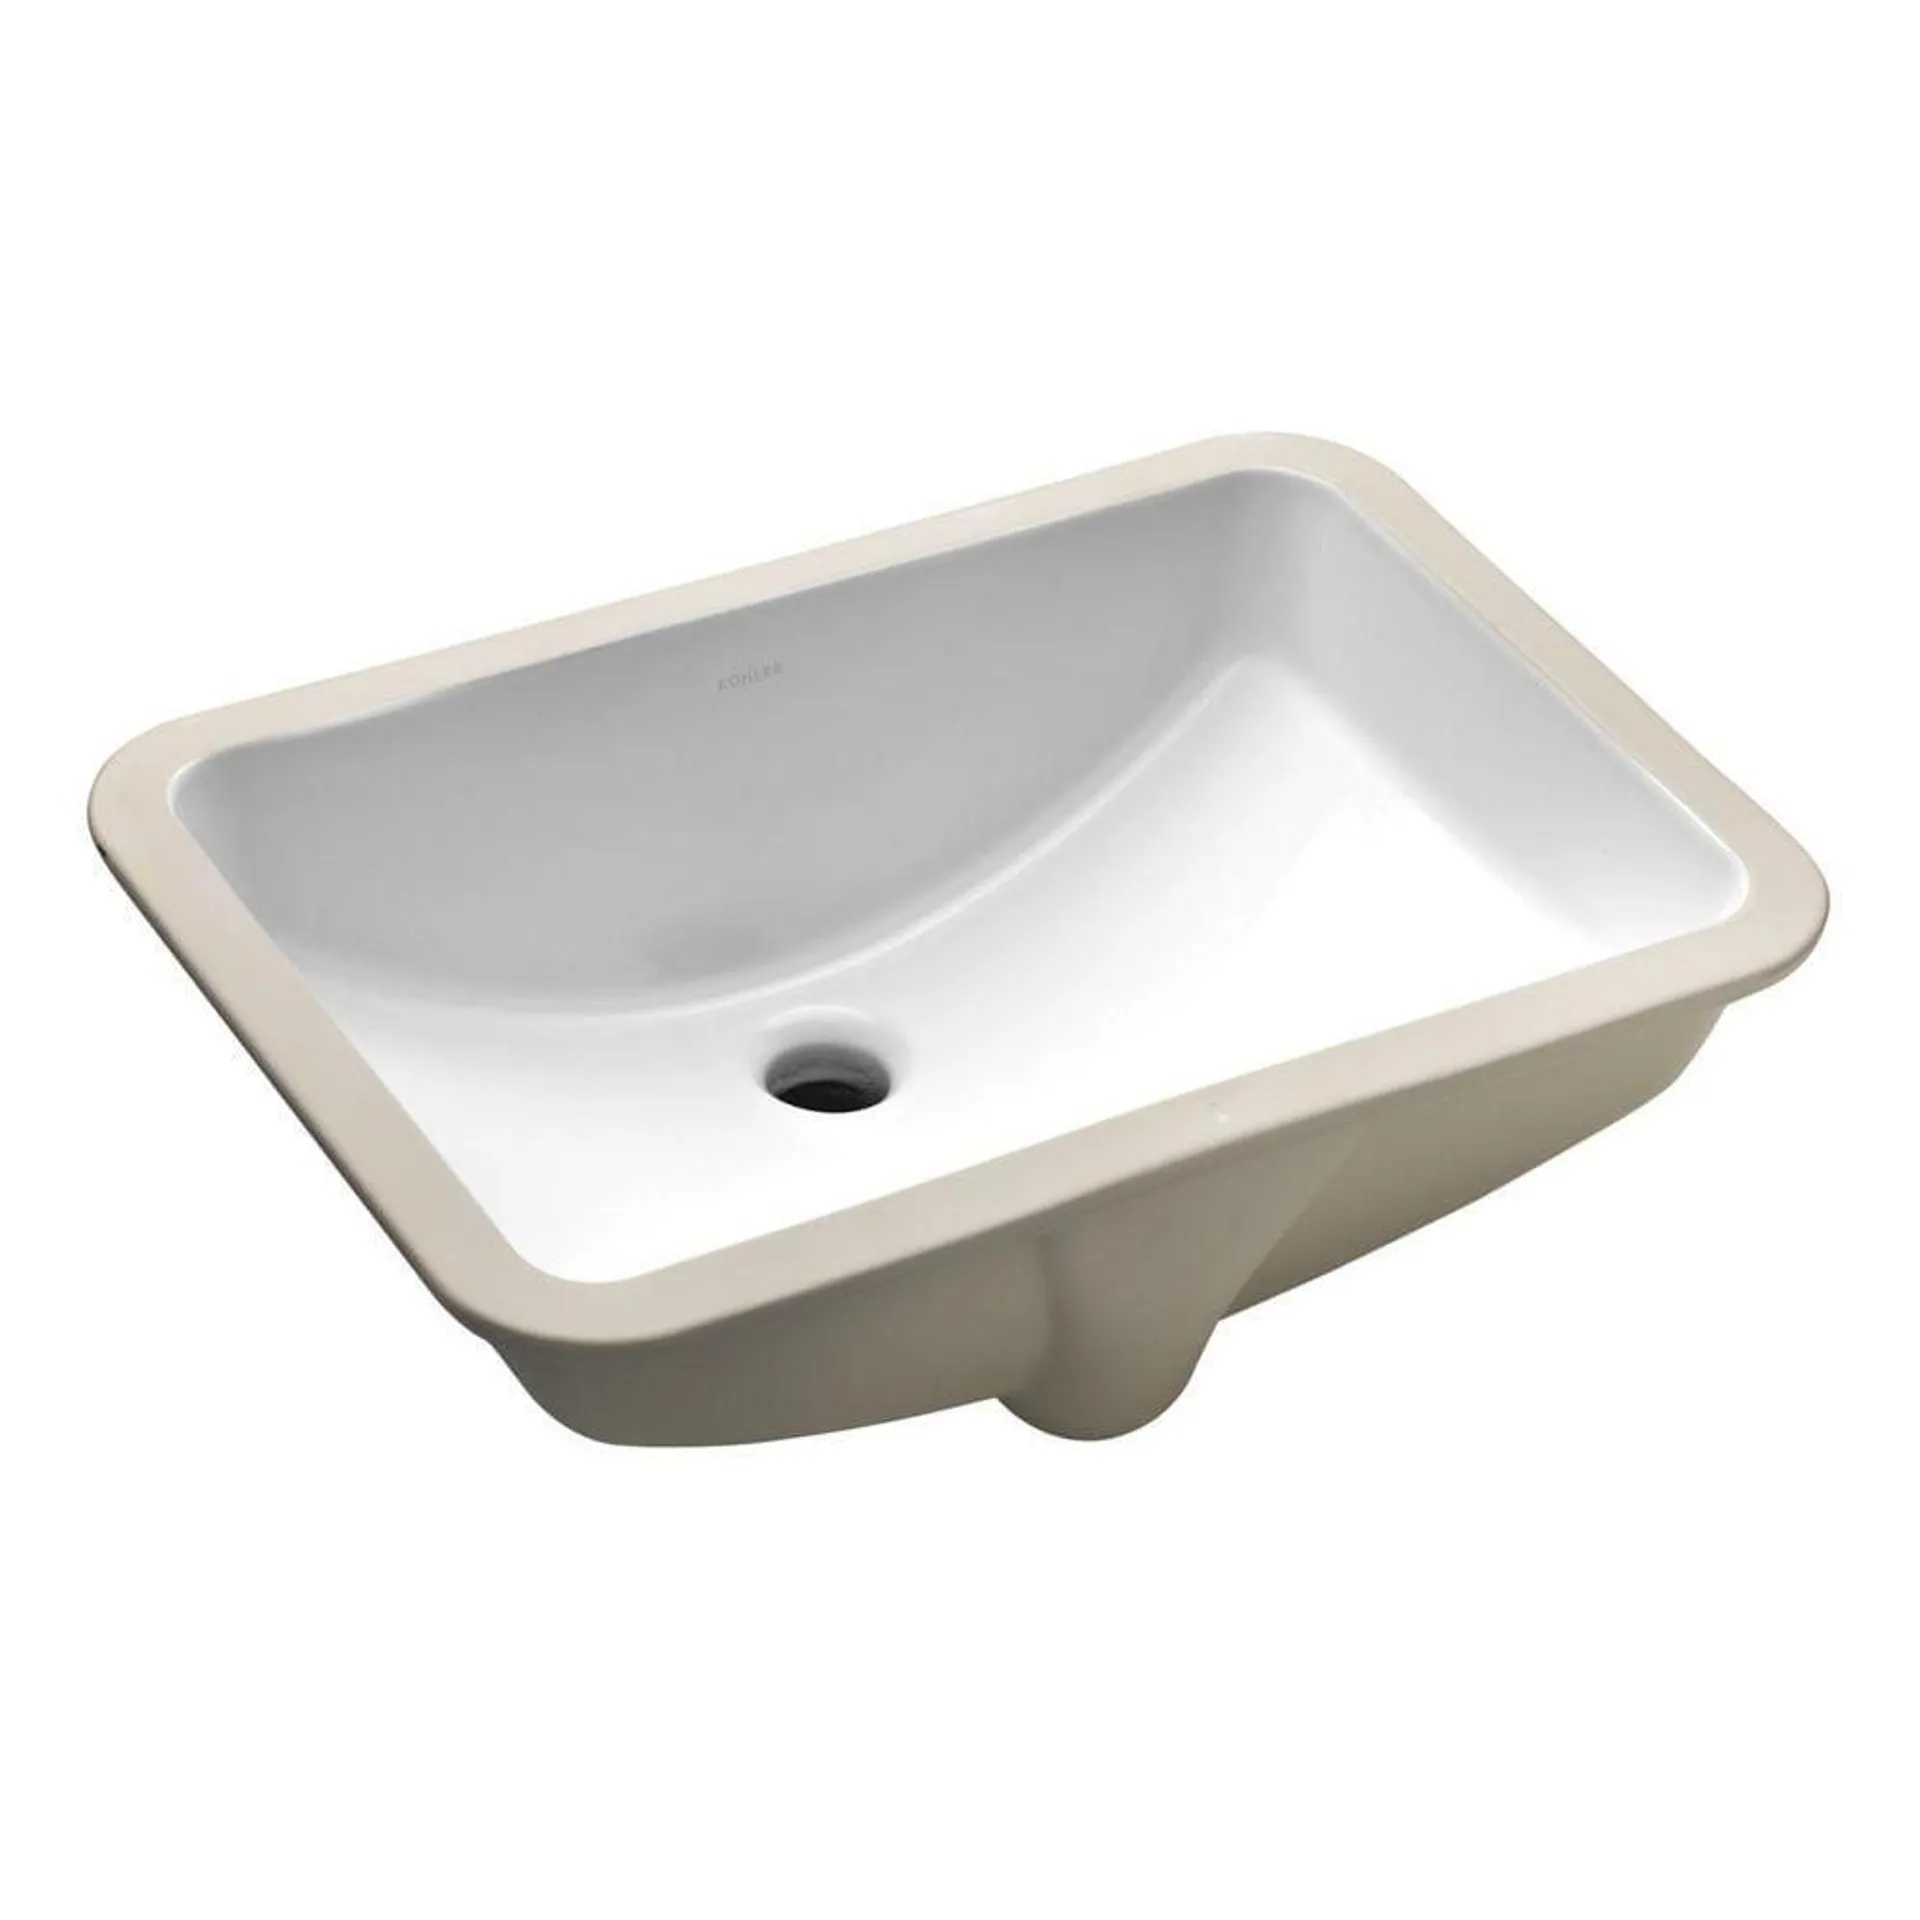 Ladena 20-7/8-inch Undermount Bathroom Sink in White with Overflow Drain